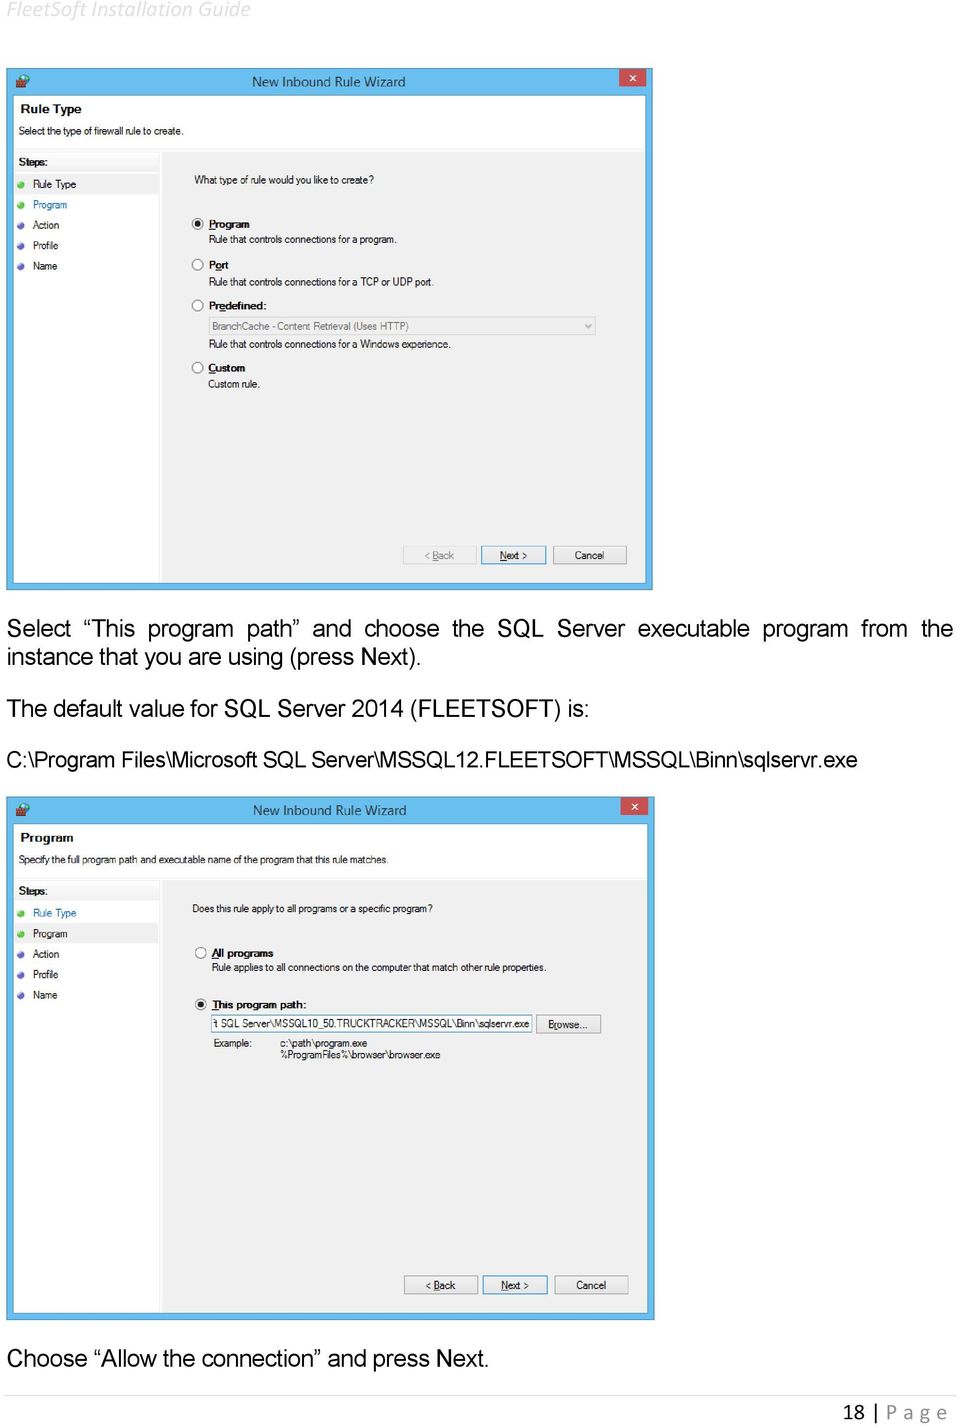 The default value for SQL Server 2014 (FLEETSOFT) is: C:\Program